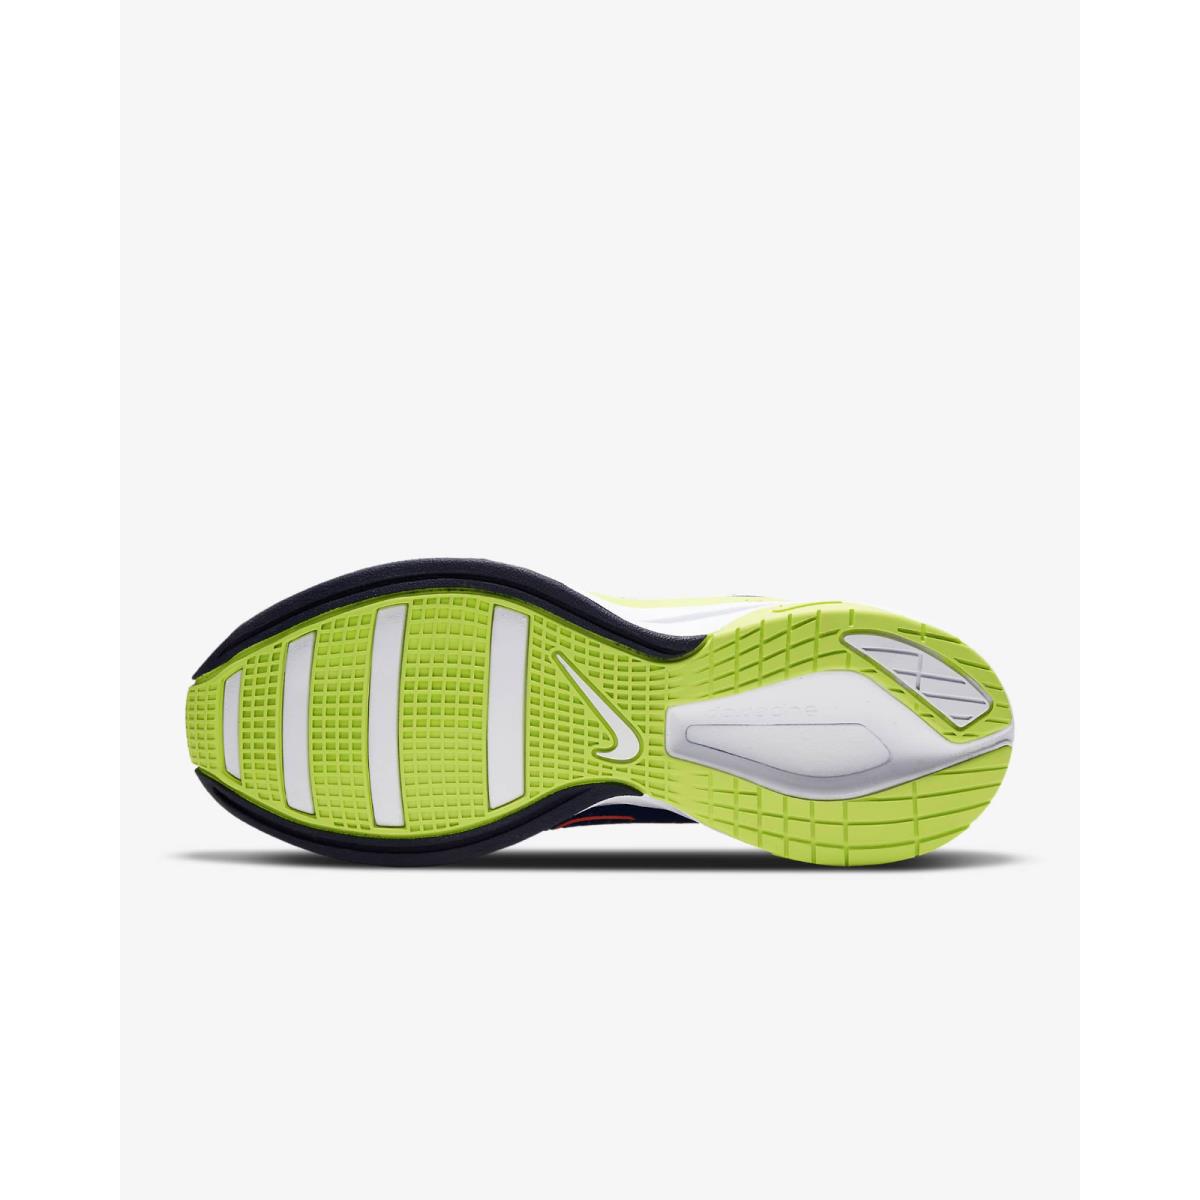 Nike shoes ZoomX SuperRep Surge - Deep Royal Blue/Cyber/Bright Mango/White 3